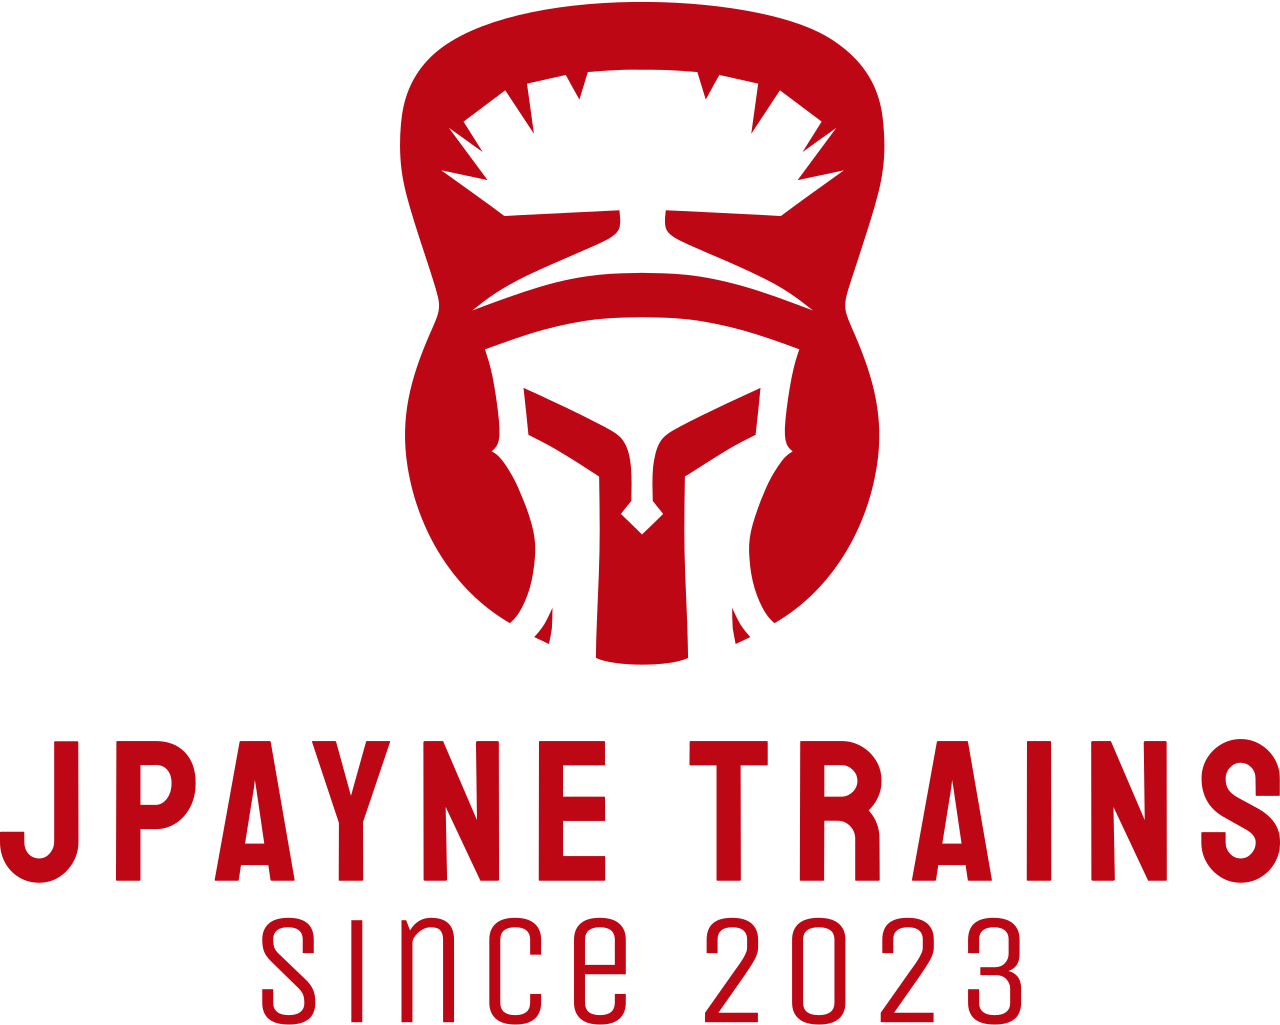 jpayne trains's web page